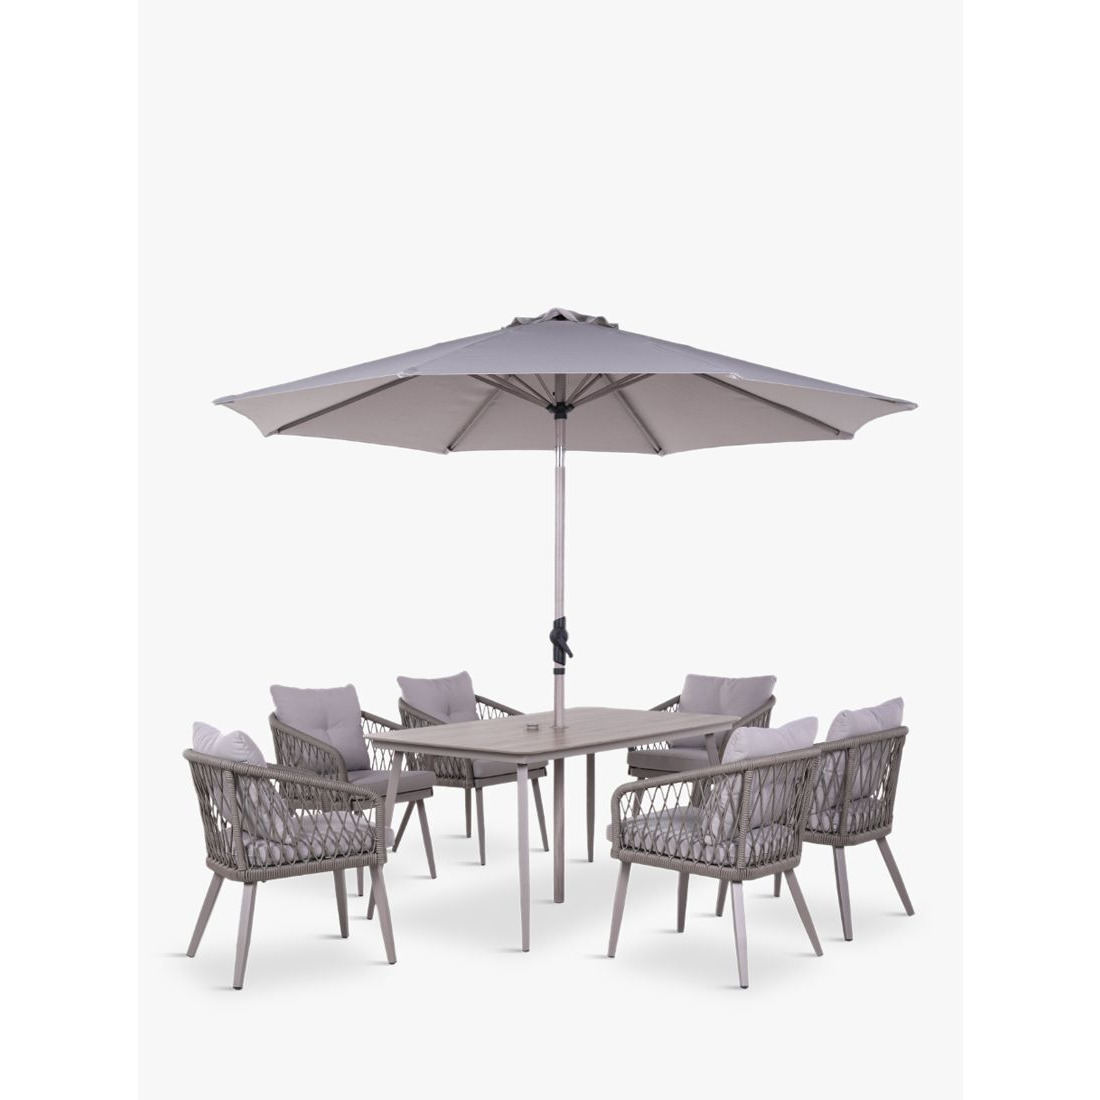 LG Outdoor Sarasota 4-Seater Rectangular Garden Dining Table & Chairs Set with Parasol, Natural - image 1